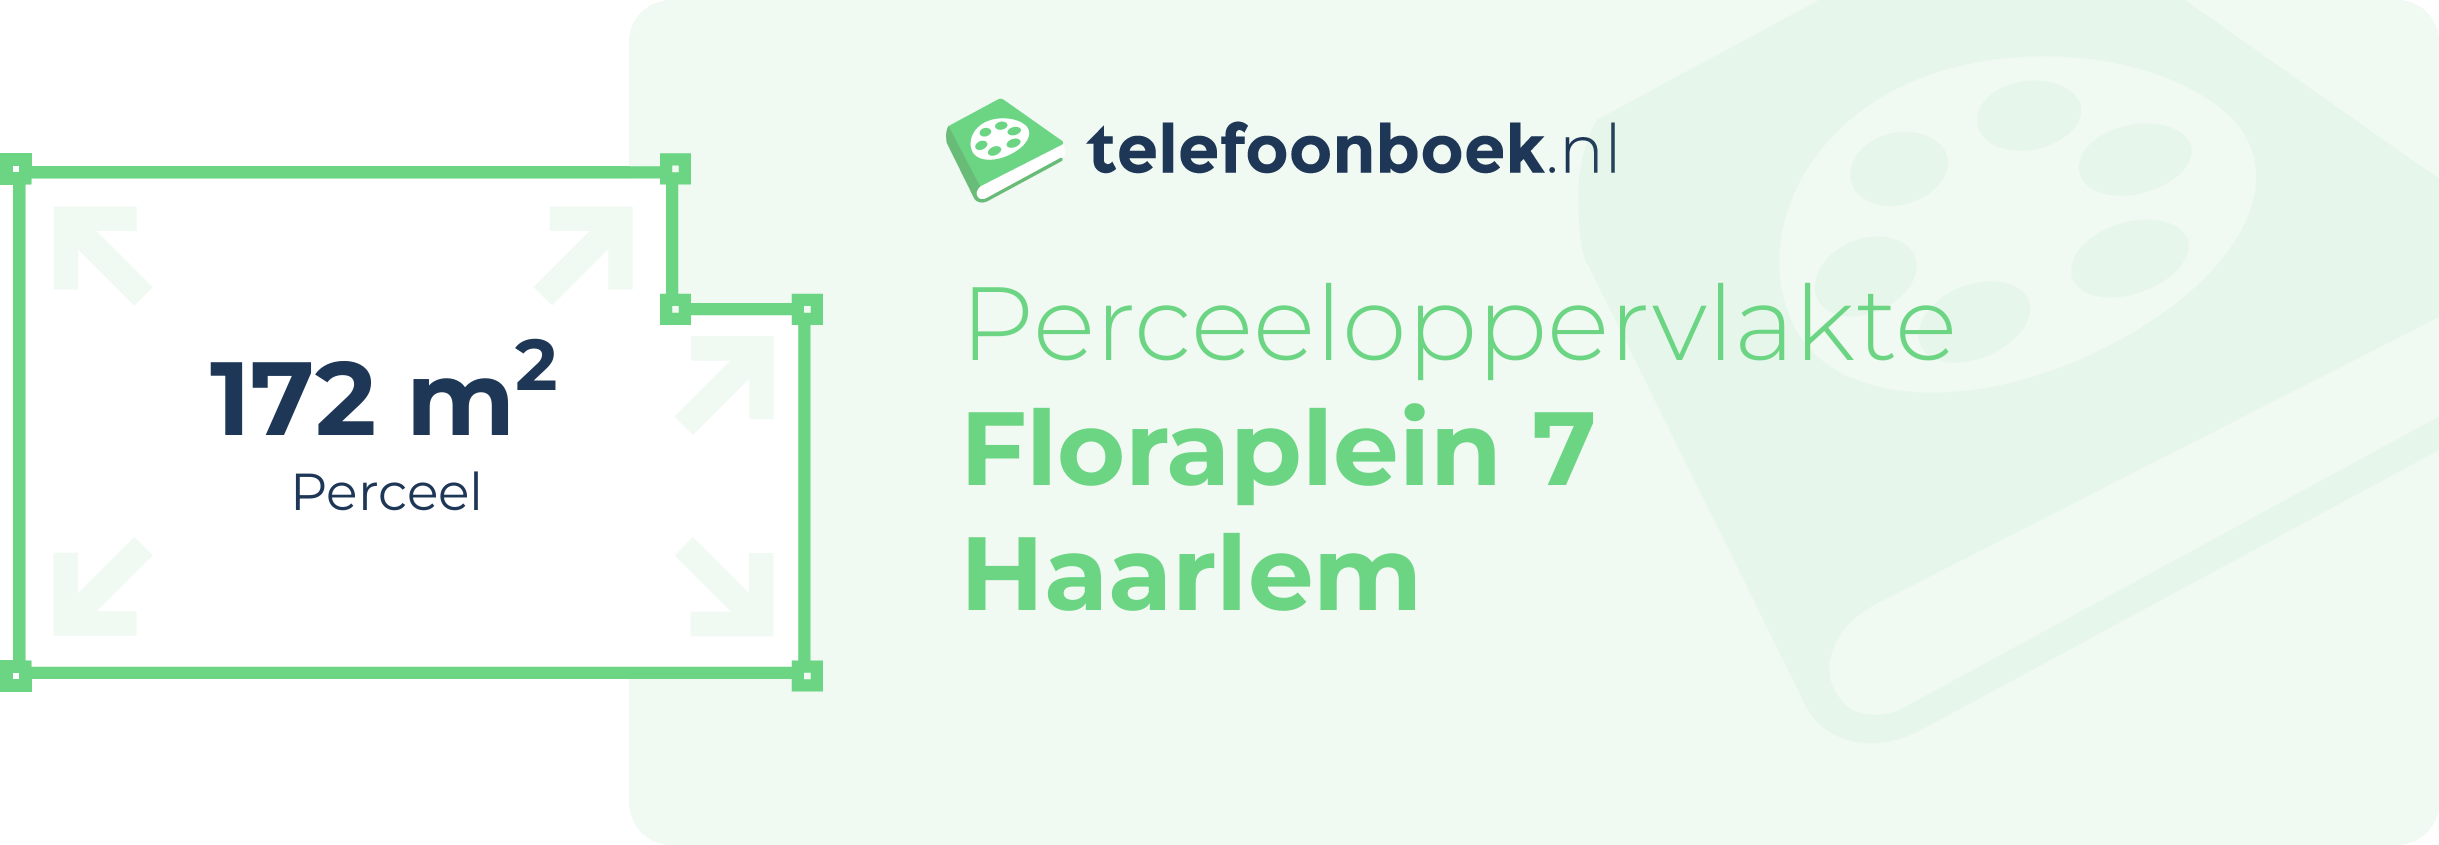 Perceeloppervlakte Floraplein 7 Haarlem